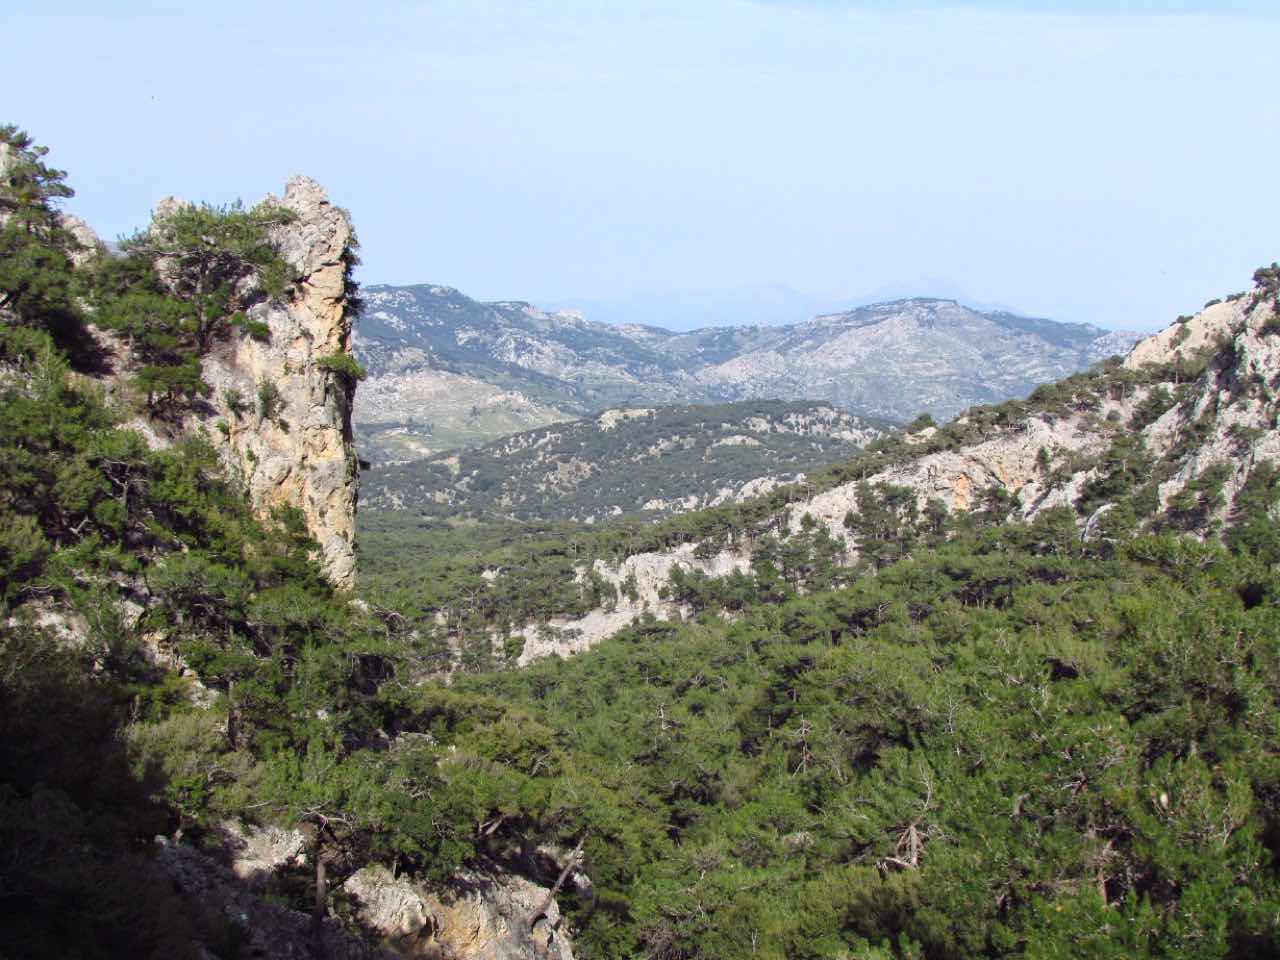 Neraidogoula The Legendary Cave In Lassithi Mountain Range, caving east crete, caving activity crete, crete activities, neraidogoula cave crete, things to do crete, best activities crete